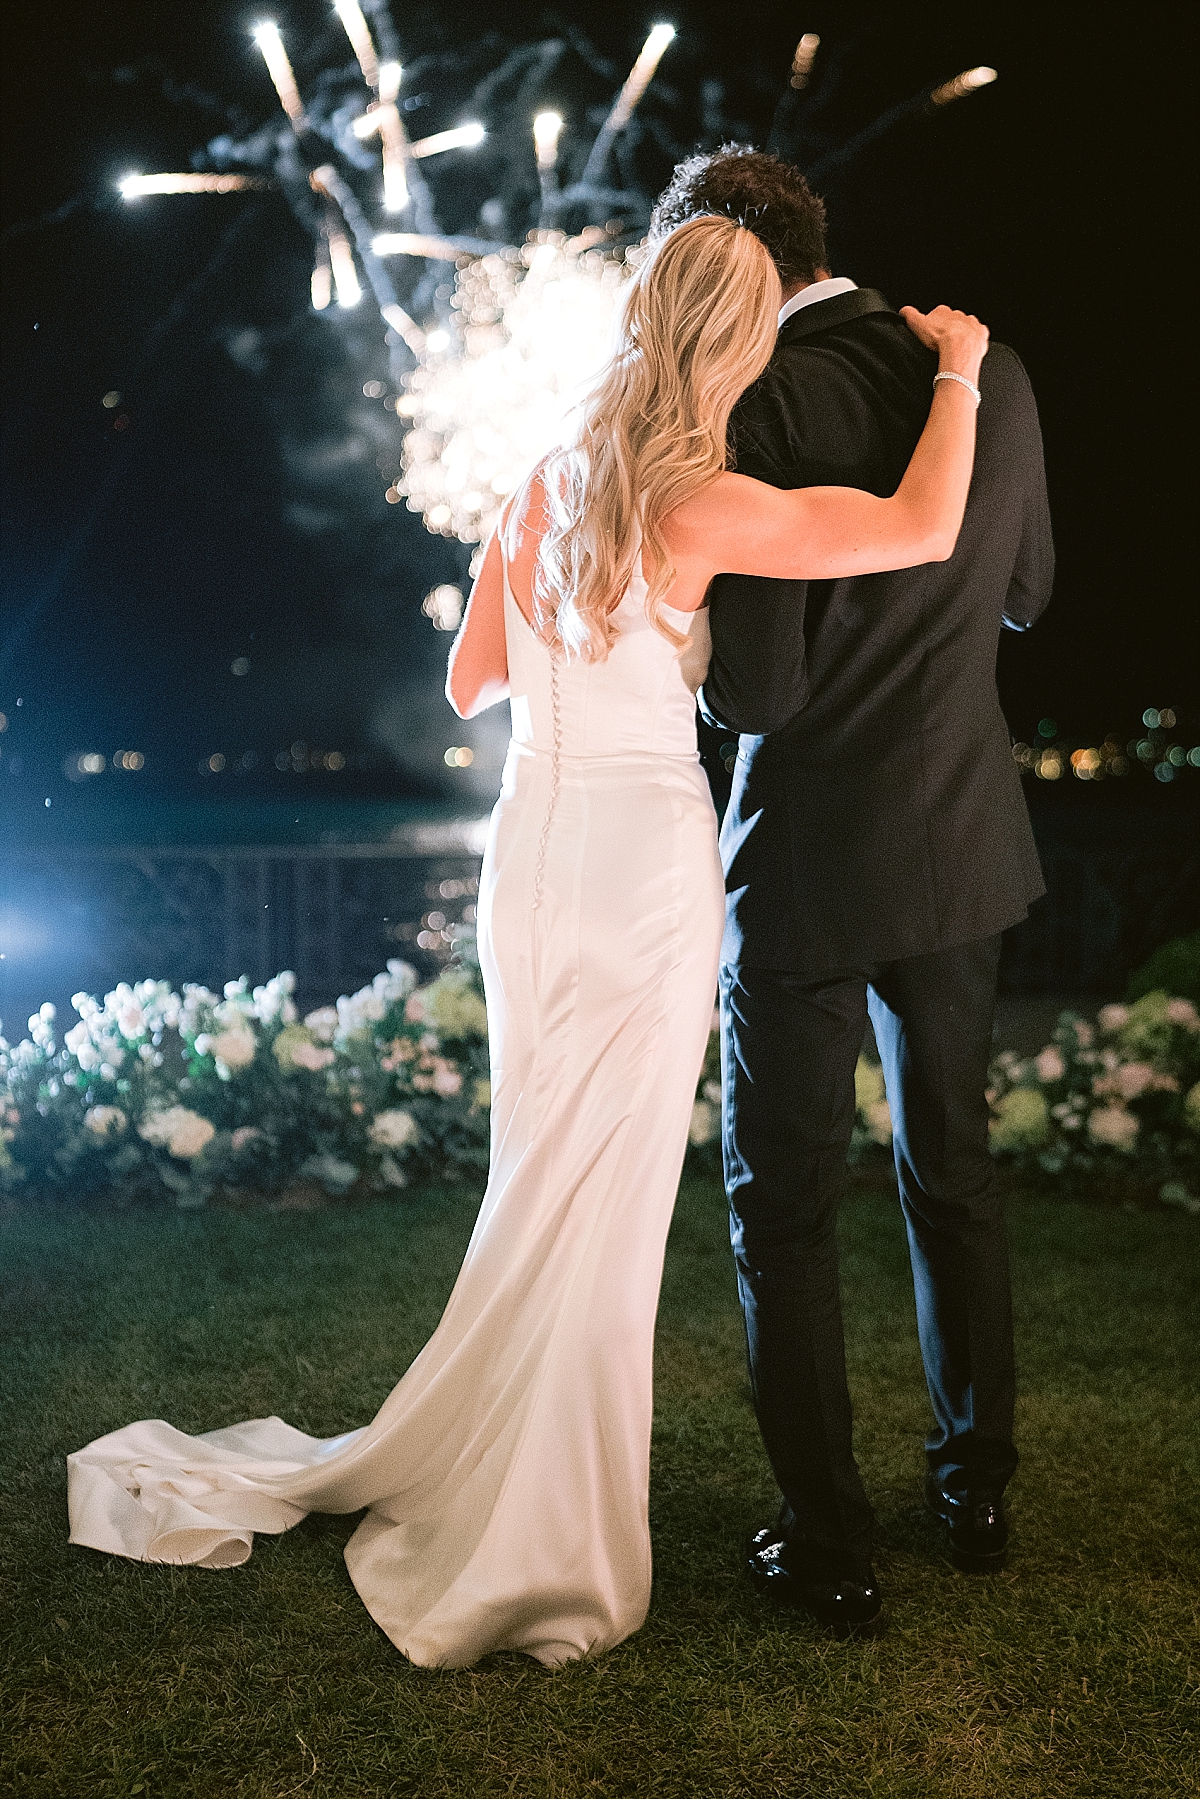 Villa Balbiano Lake como
Luxury wedding 
Photographer lake como 
Firework 
Bride and groom 